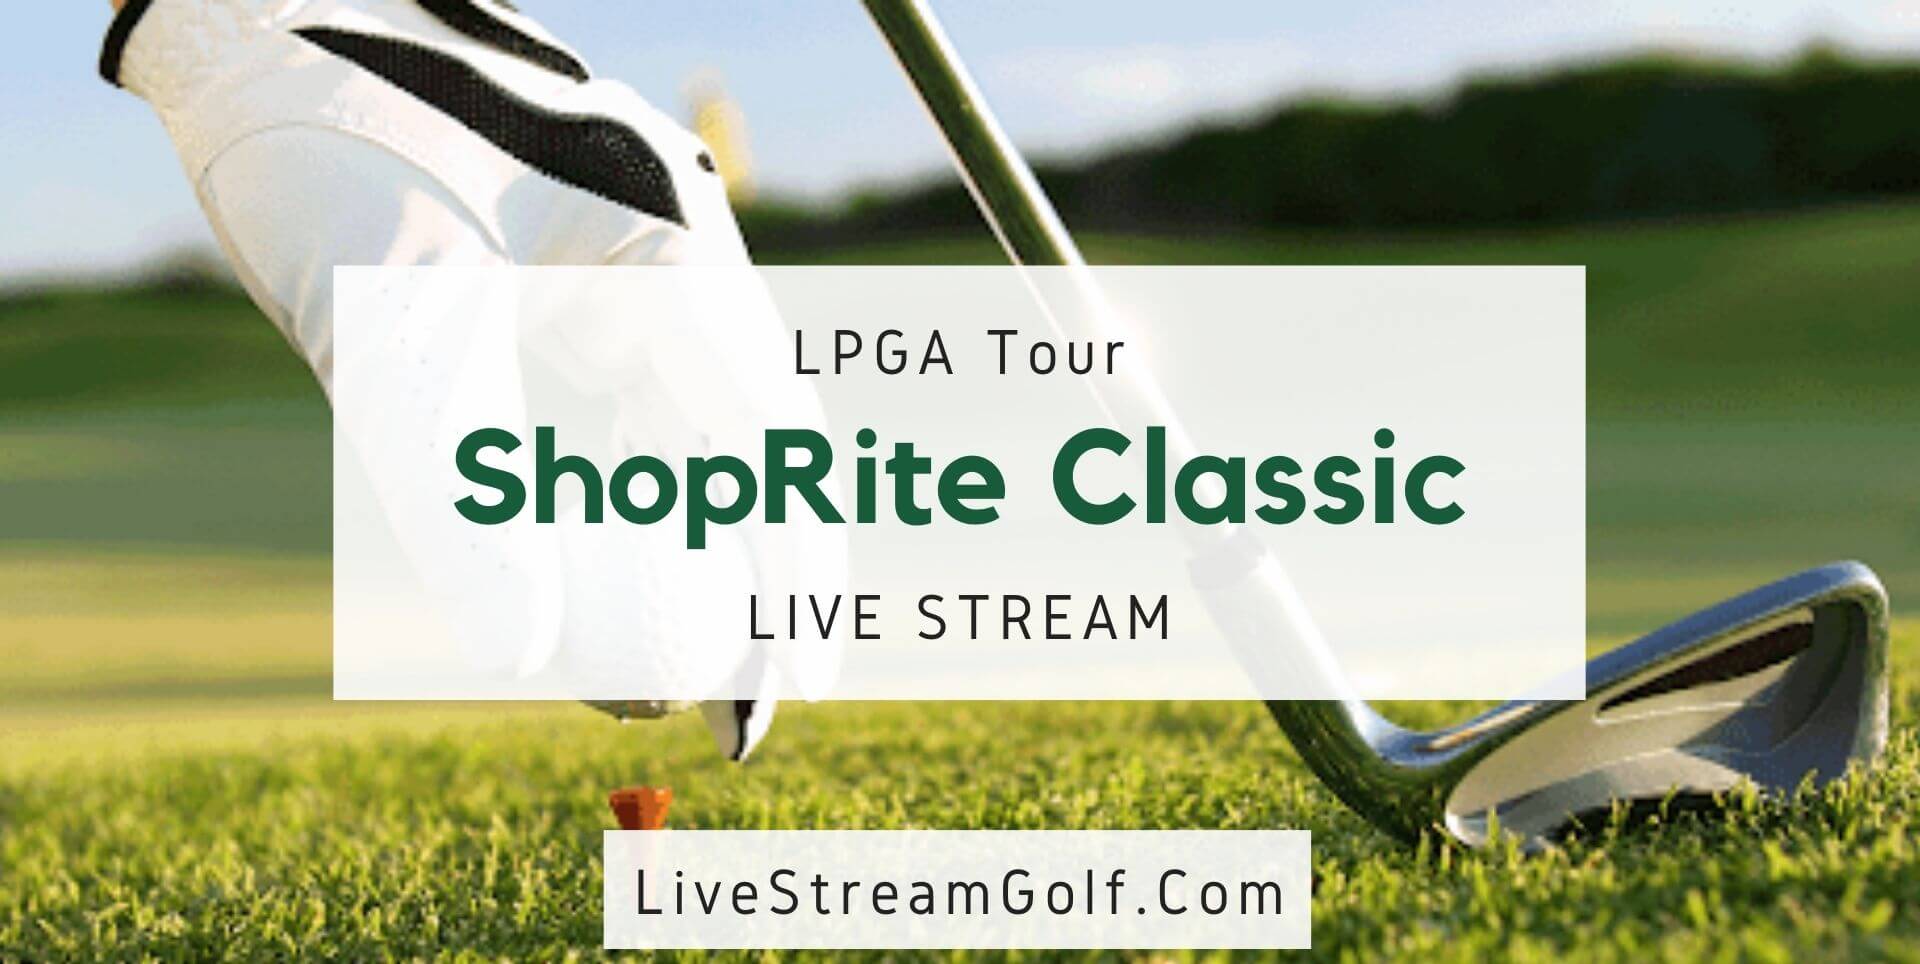 ShopRite Classic Day 1 Live Stream: LPGA Tour 2022